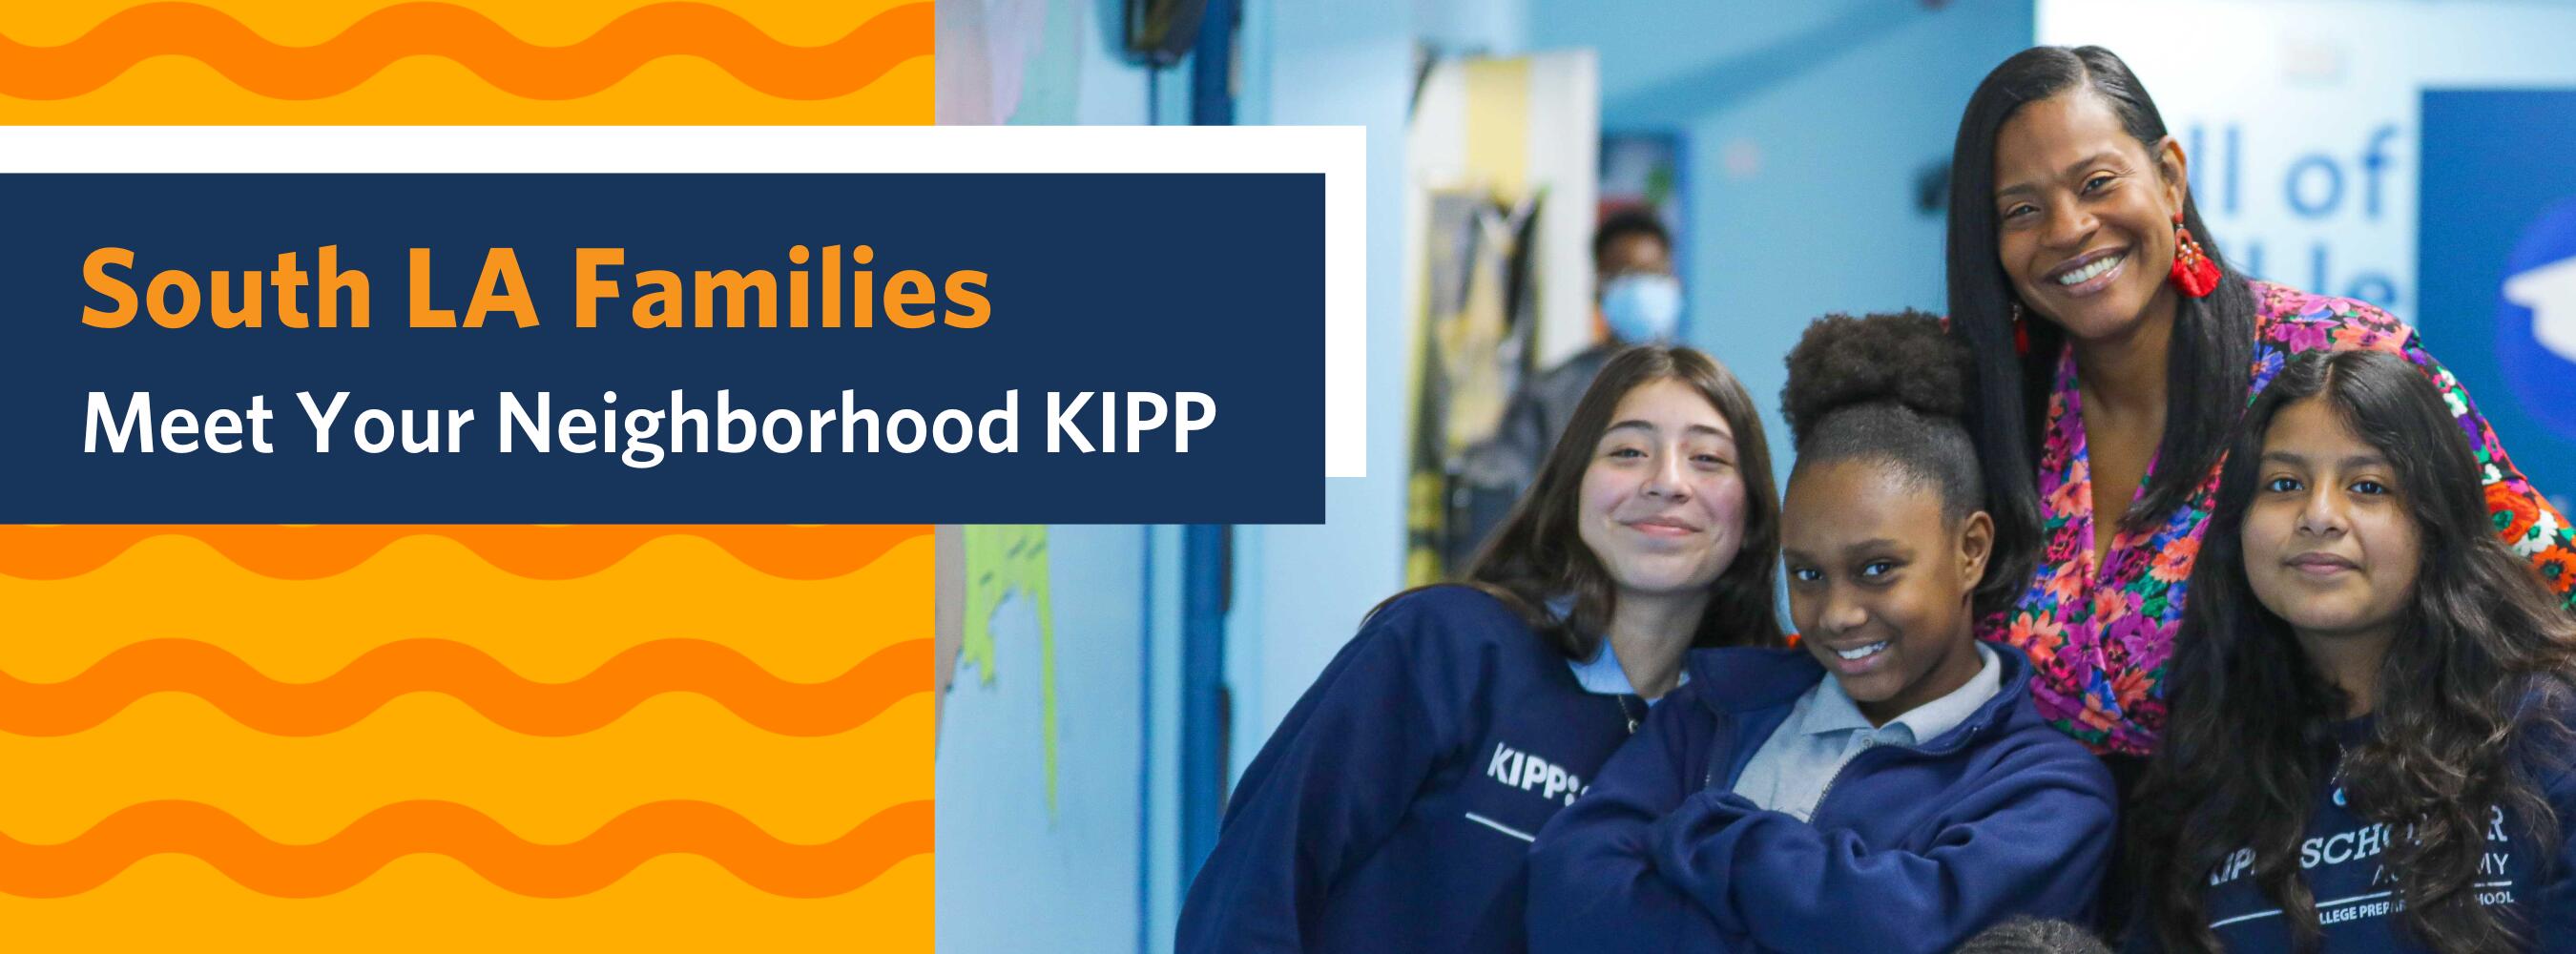 South LA Families: Meet Your Neighborhood KIPP